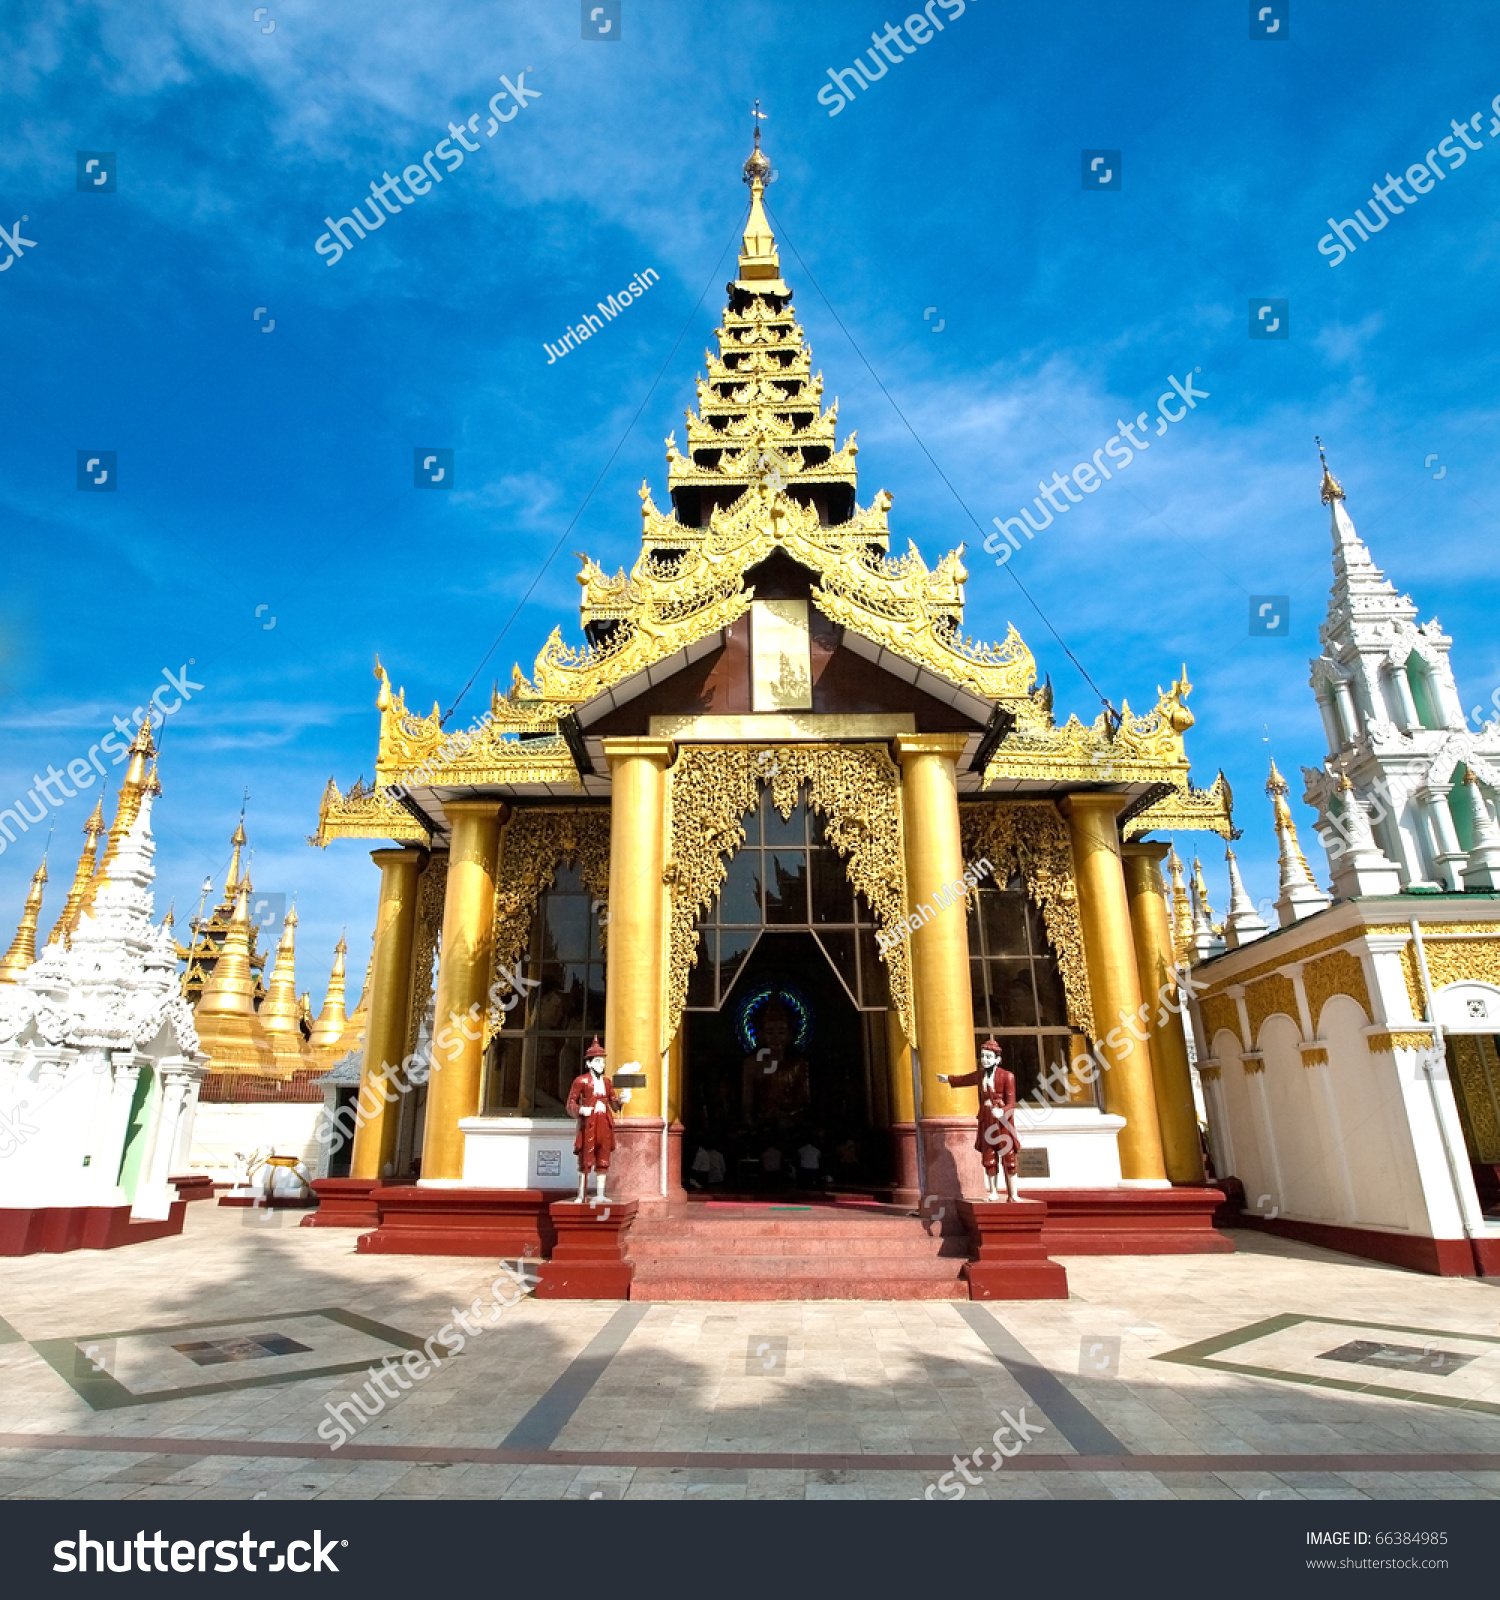 Ornate buddhist pavilion photo